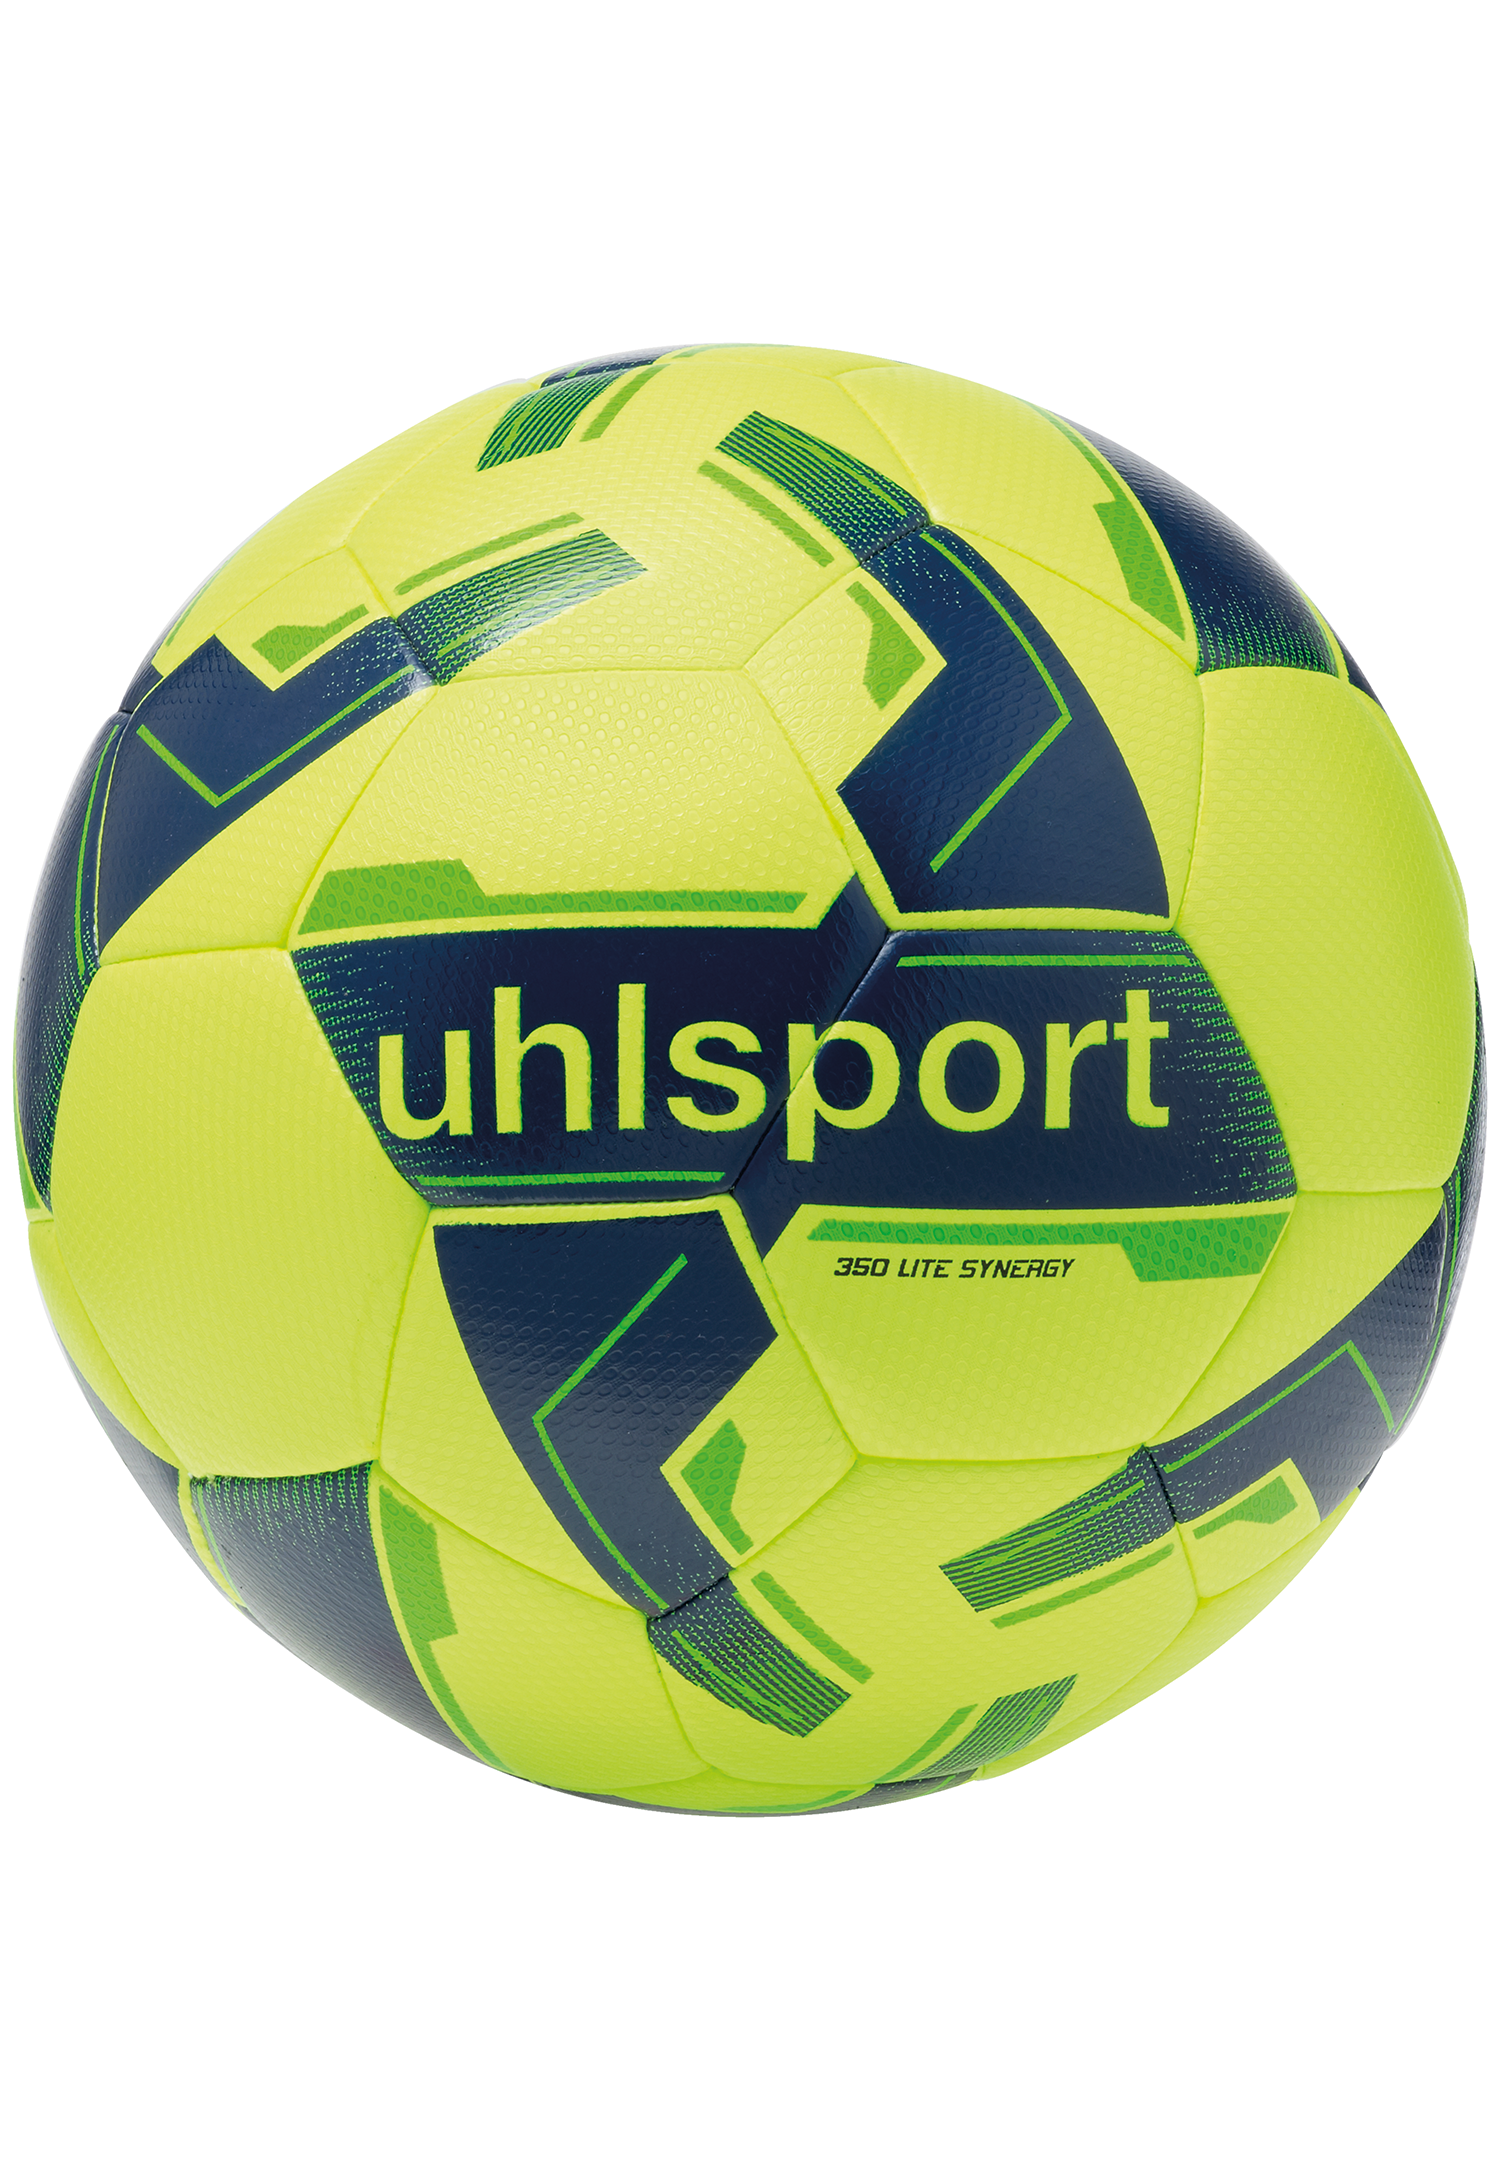 Uhlsport 350 LITE SYNERGY Fussball Gr.5 100172101 von uhlsport